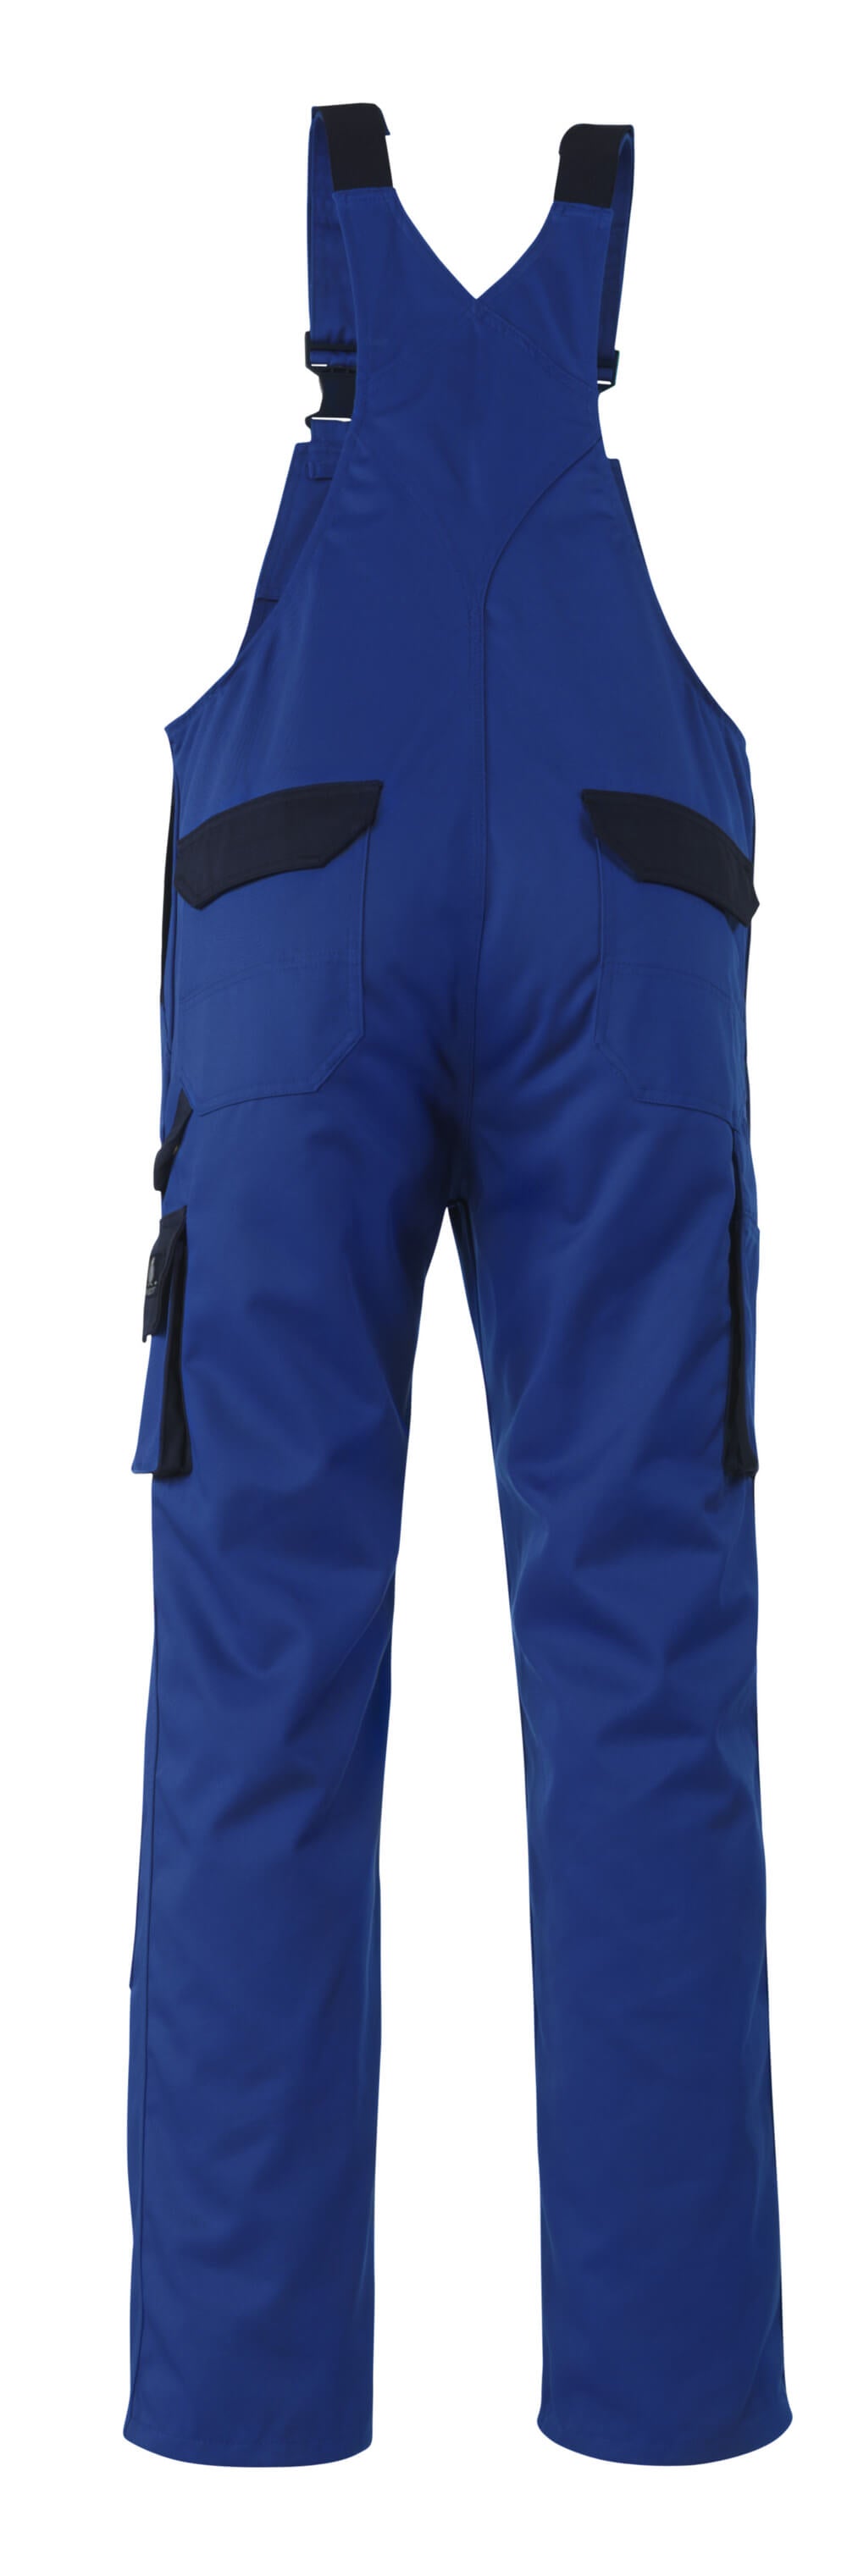 Mascot IMAGE  Milano Bib & Brace with kneepad pockets 00969 royal/navy